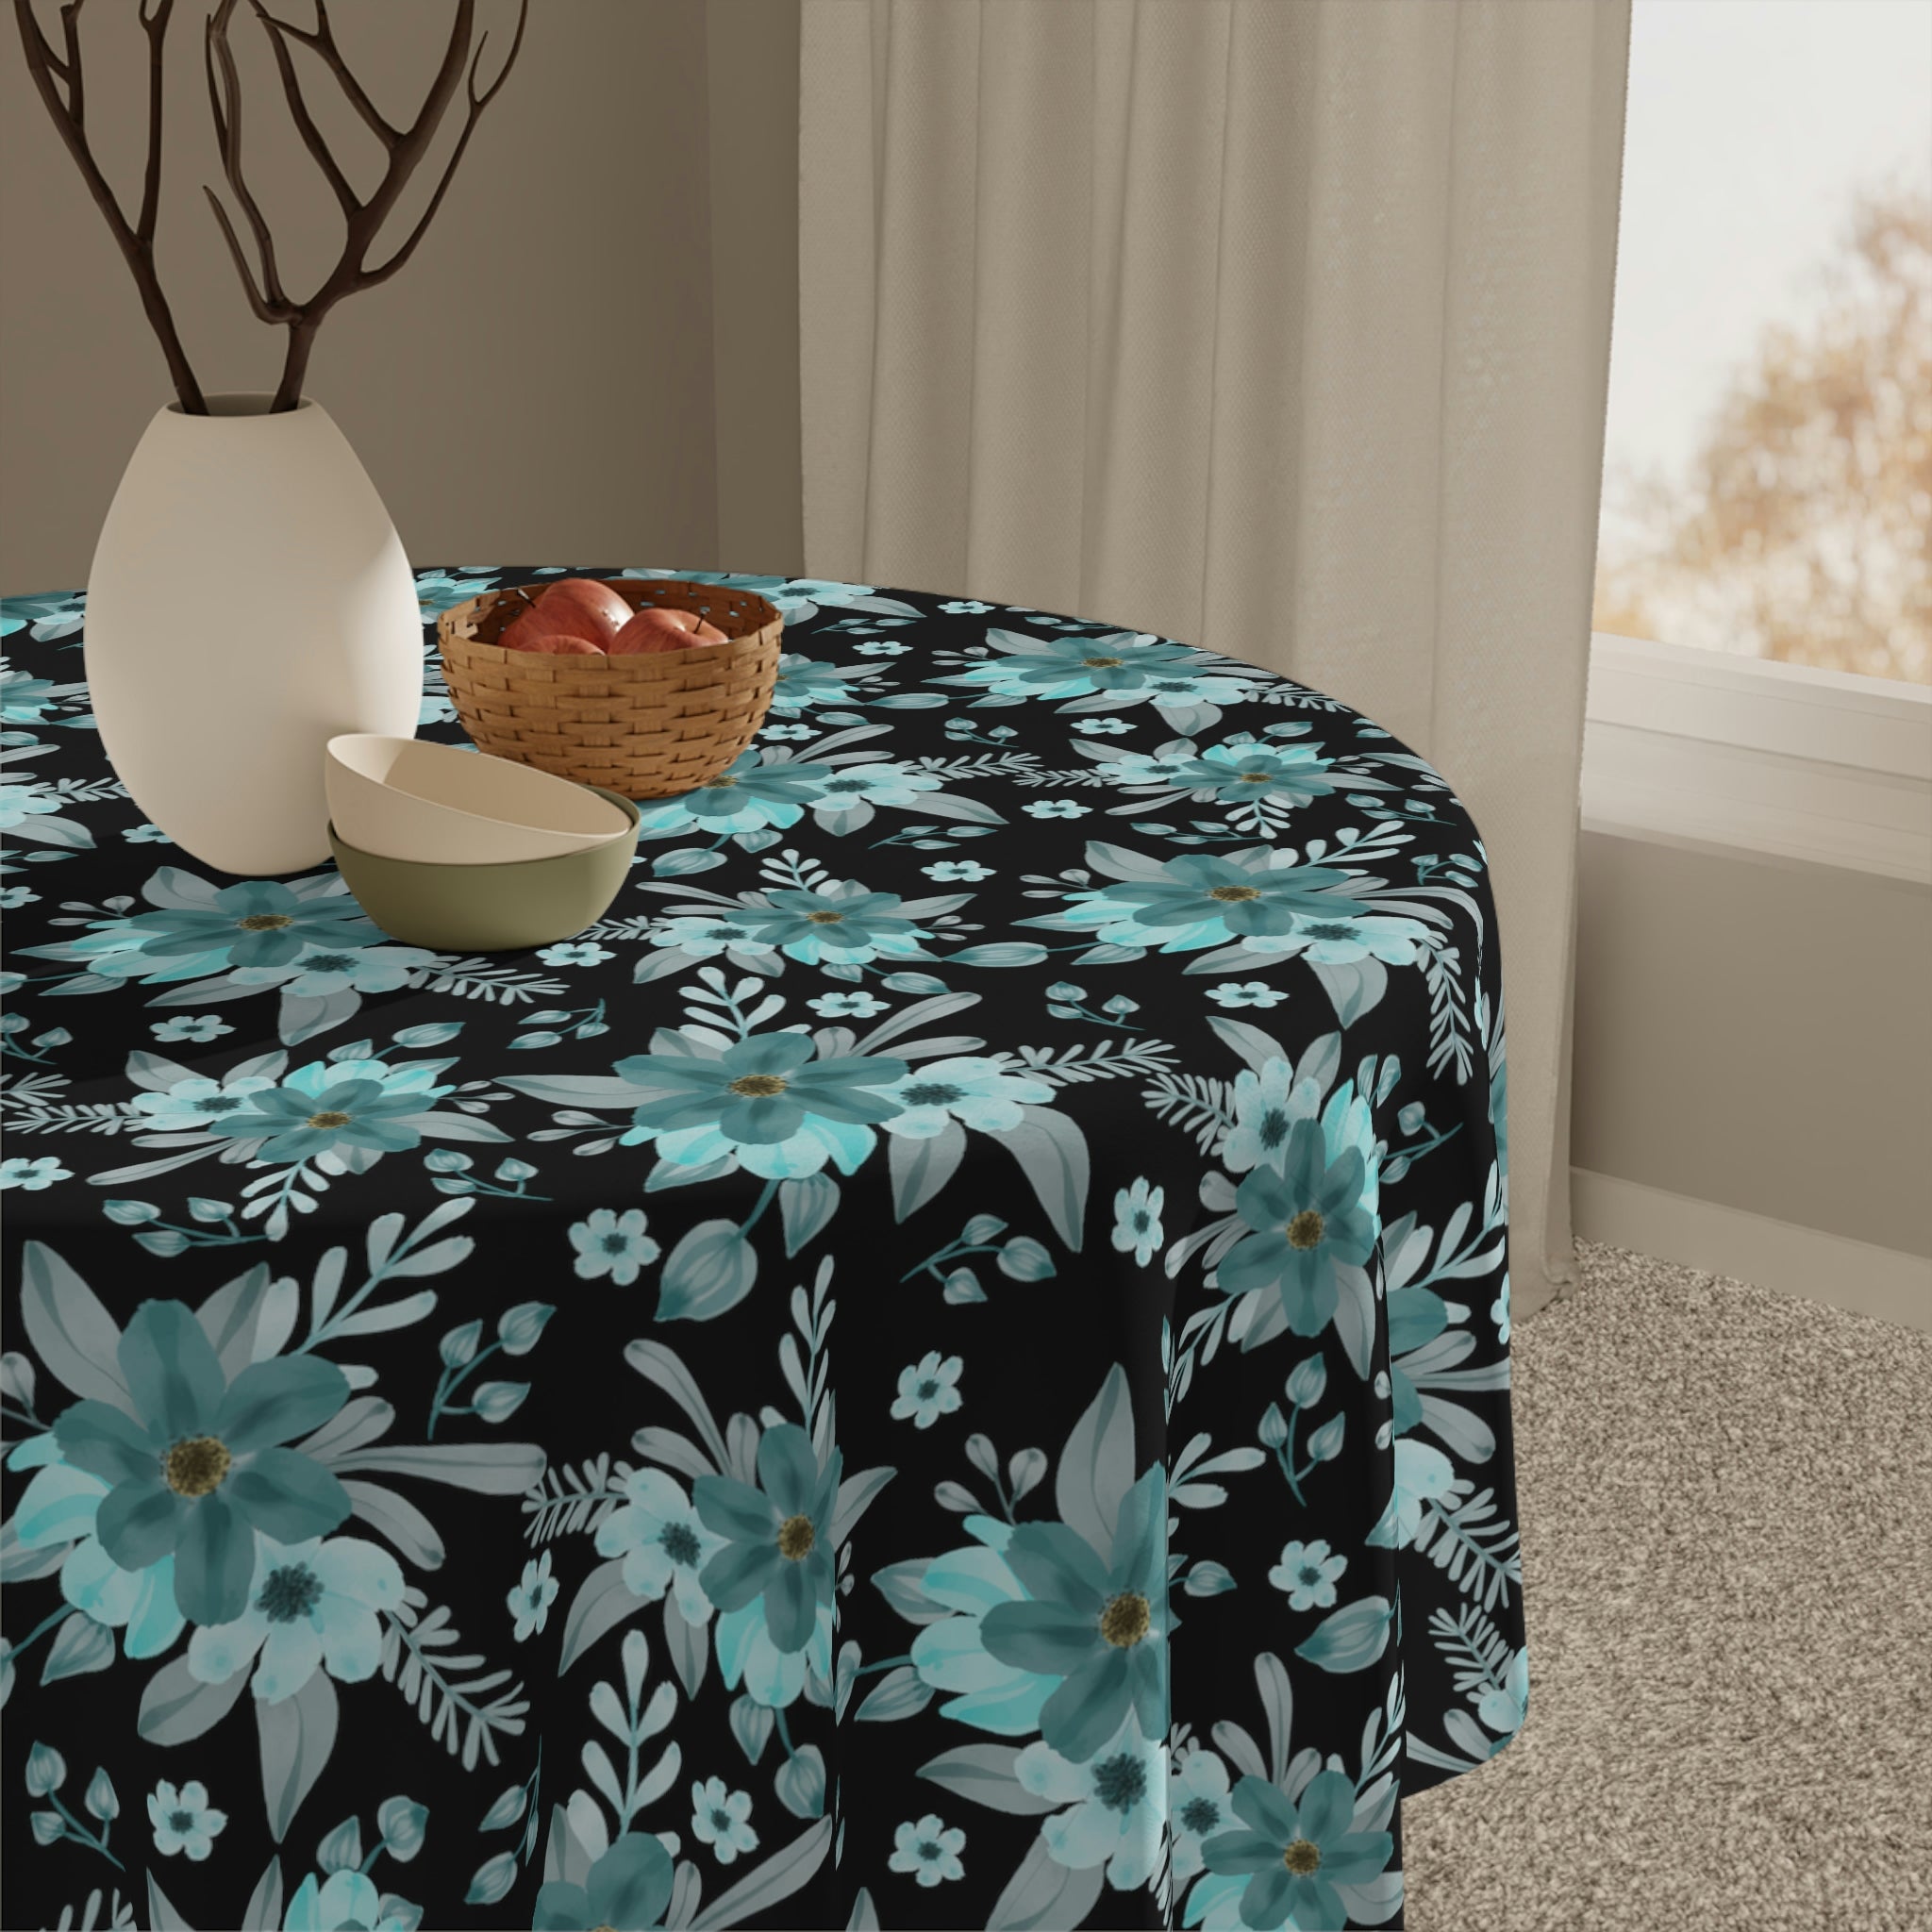 Blue flowers - Black tablecloth